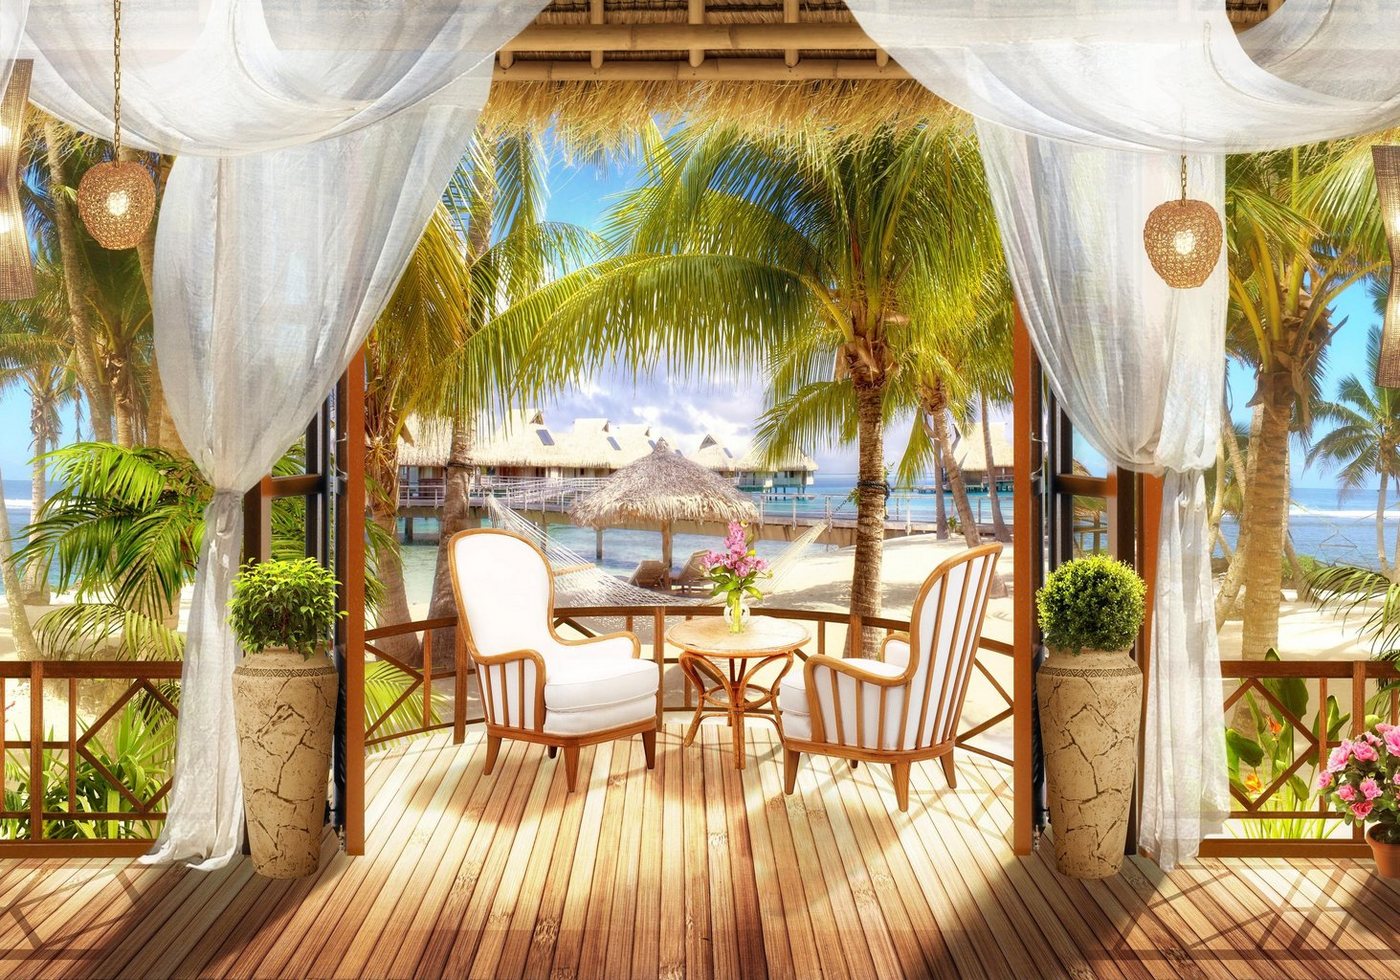 wandmotiv24 Fototapete Urlaub Balkon Strand, strukturiert, Wandtapete, Motivtapete, matt, Vinyltapete, selbstklebend von wandmotiv24